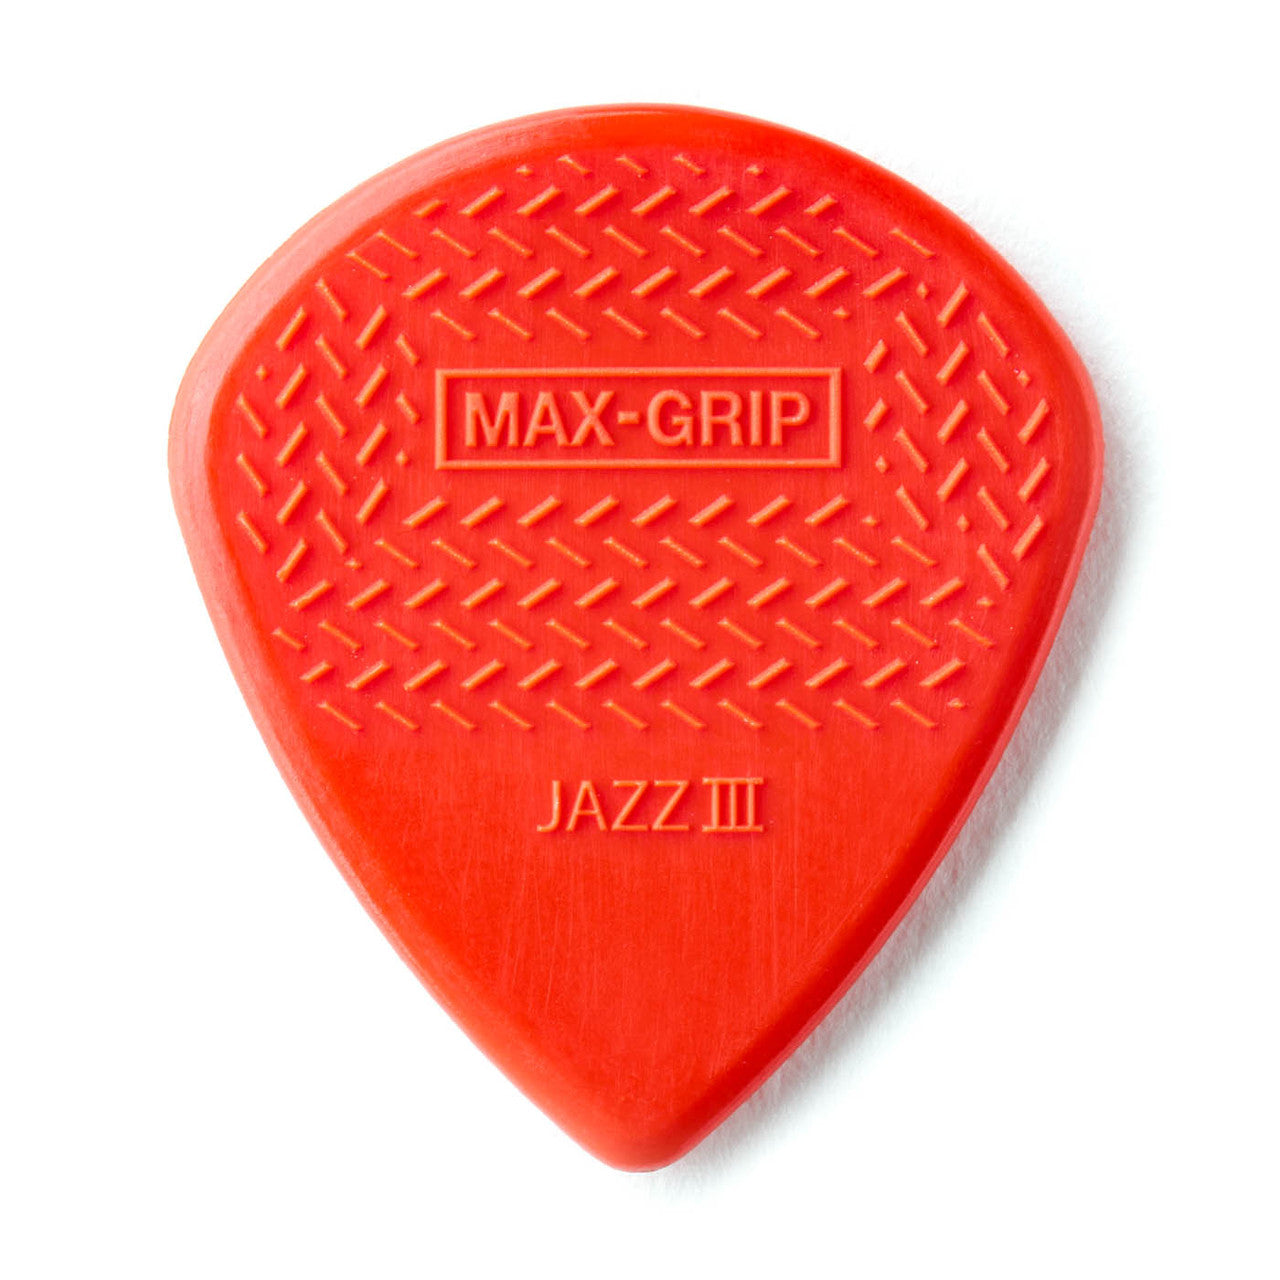 Dunlop Nylon Max-Grip Jazz III Guitar Pick - Red (6 pk)